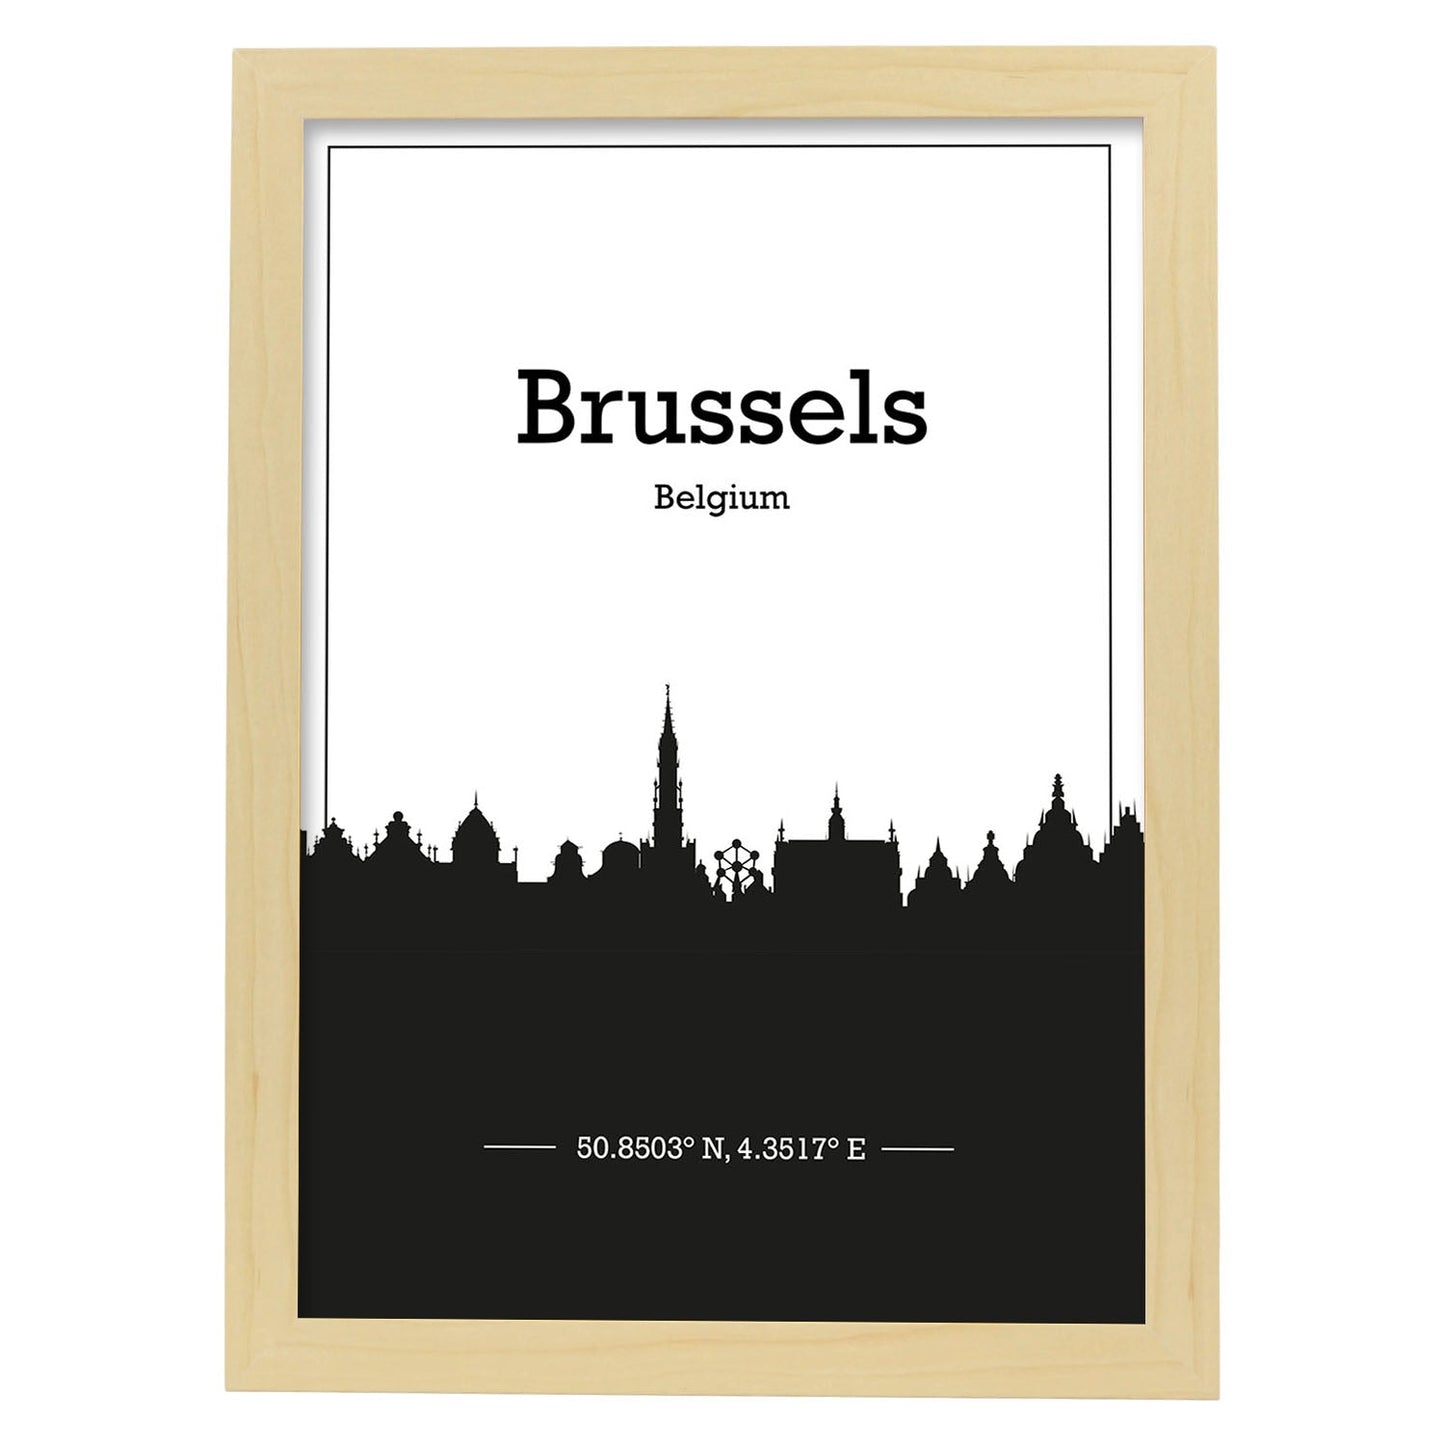 Poster con mapa de Brussels - Belgica. Láminas con Skyline de ciudades de Europa con sombra negra.-Artwork-Nacnic-A4-Marco Madera clara-Nacnic Estudio SL